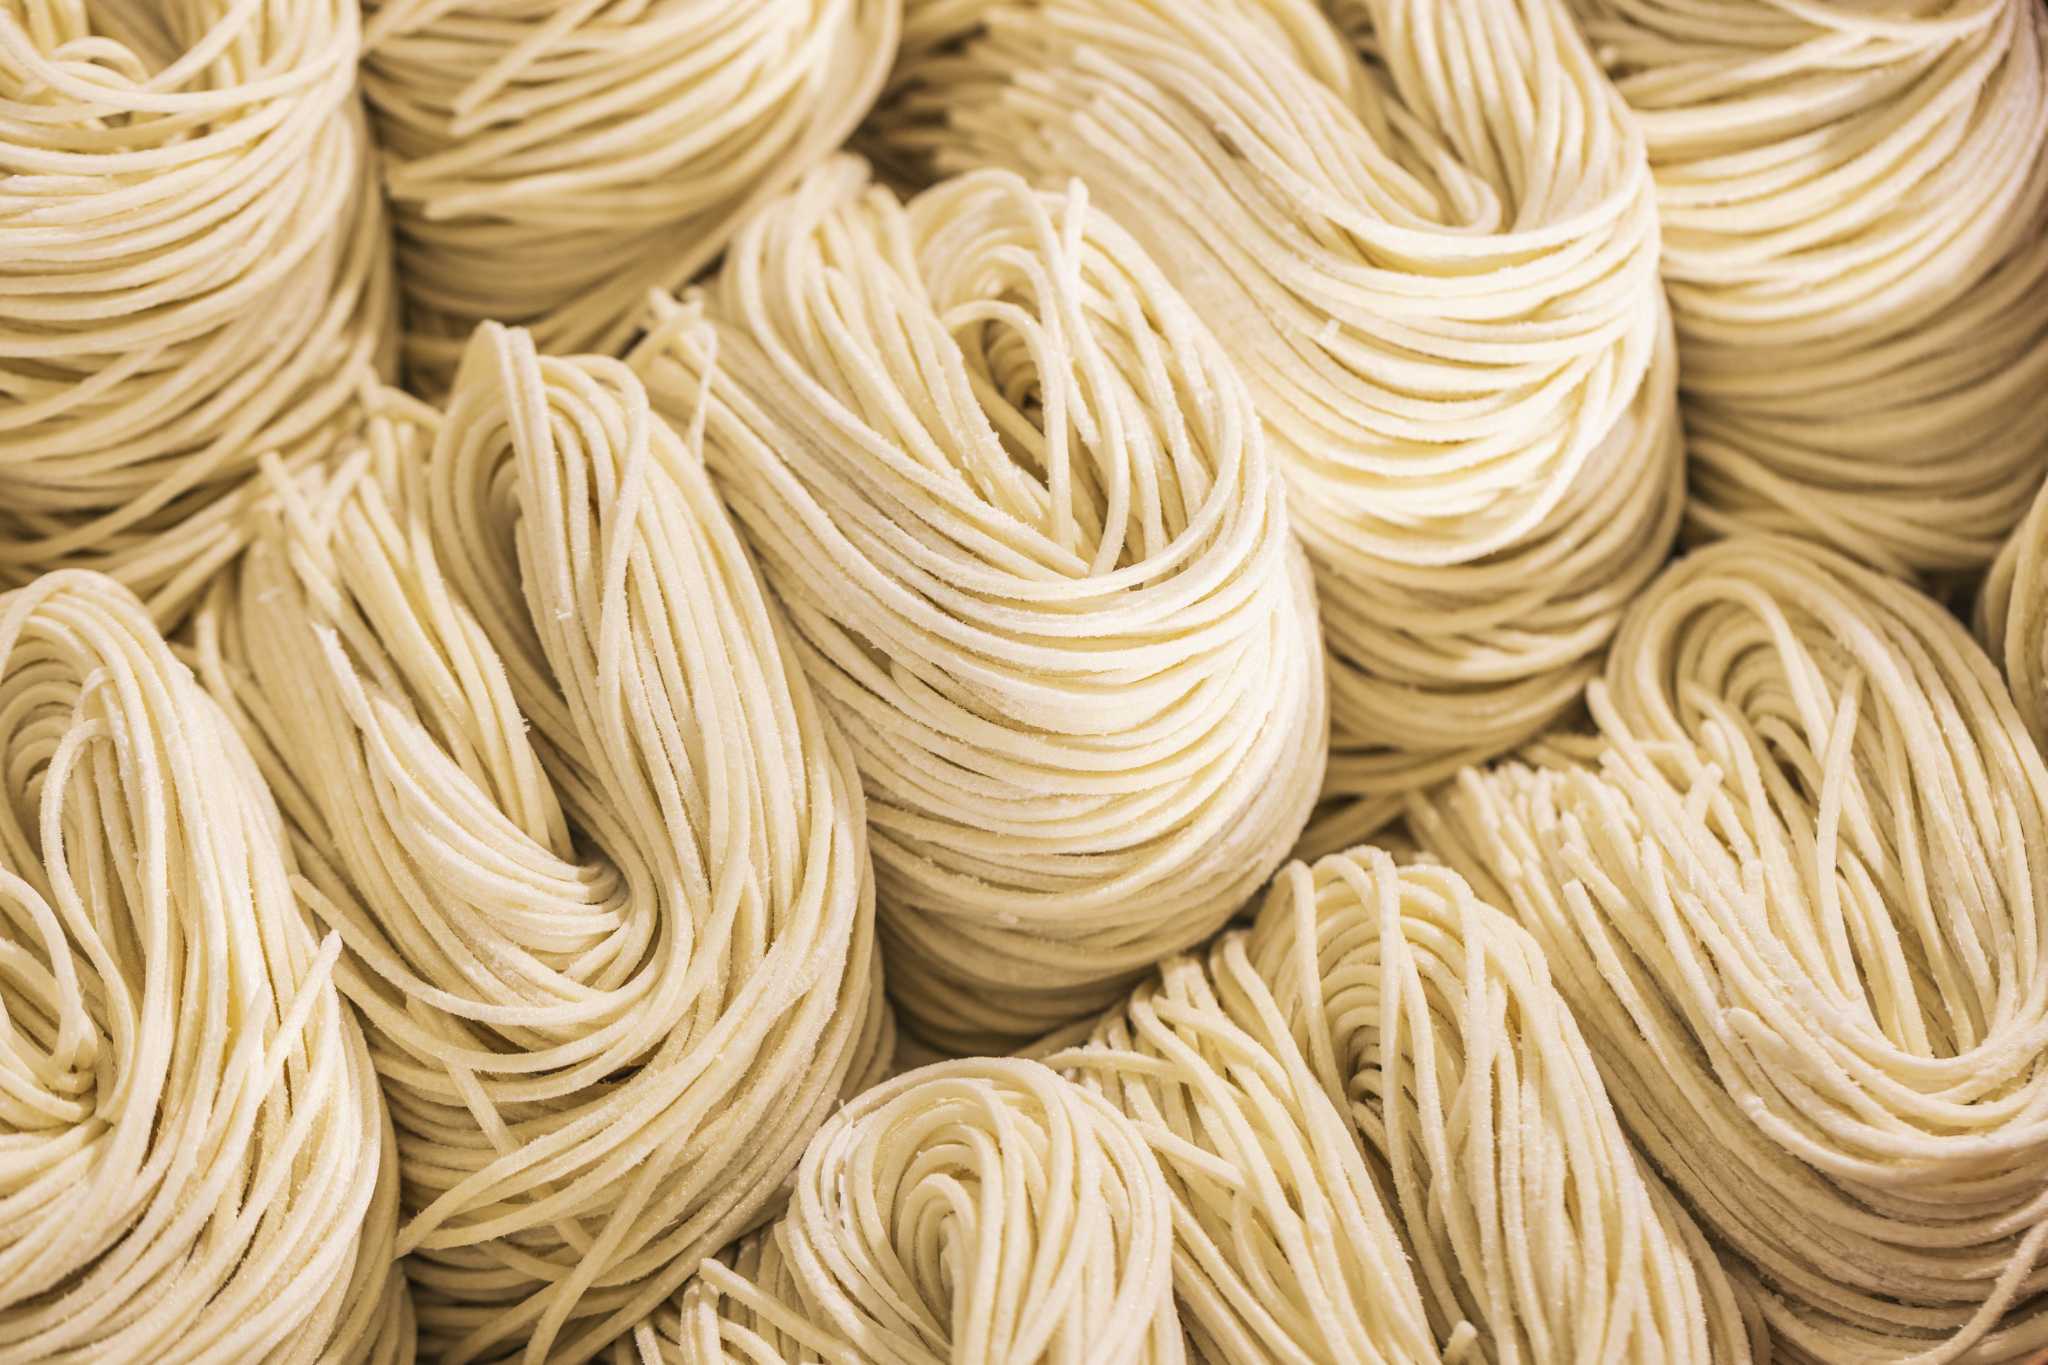 Iseya Craft Noodle is making the Bay Area’s best ramen noodles